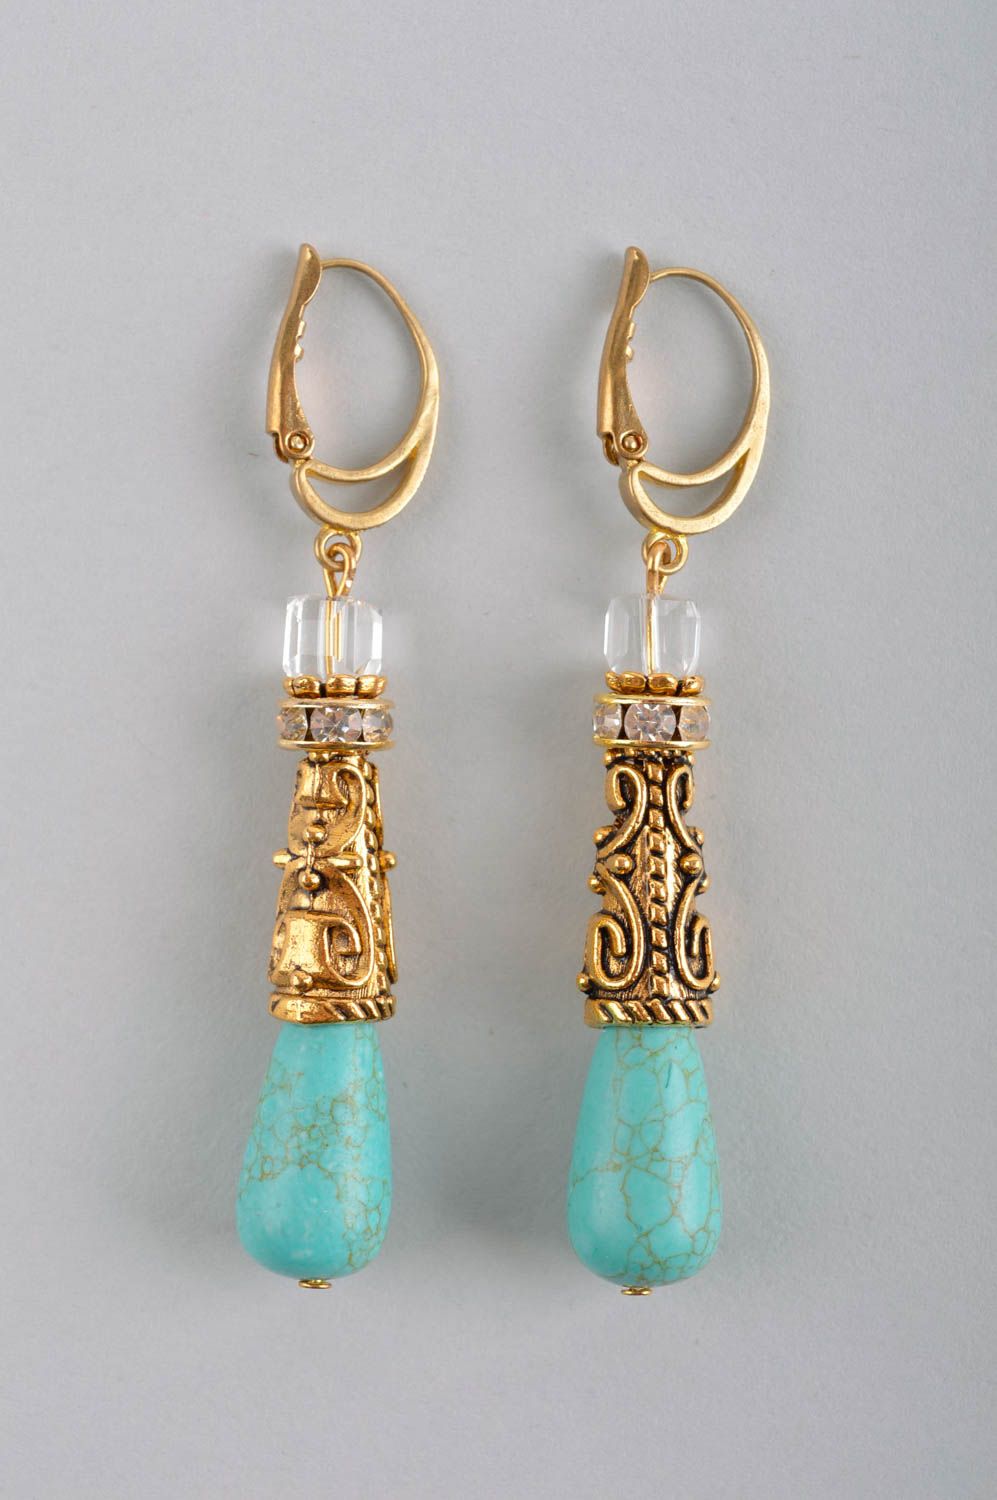 Handmade earrings designer jewelry dangling earrings fashion accessories photo 3